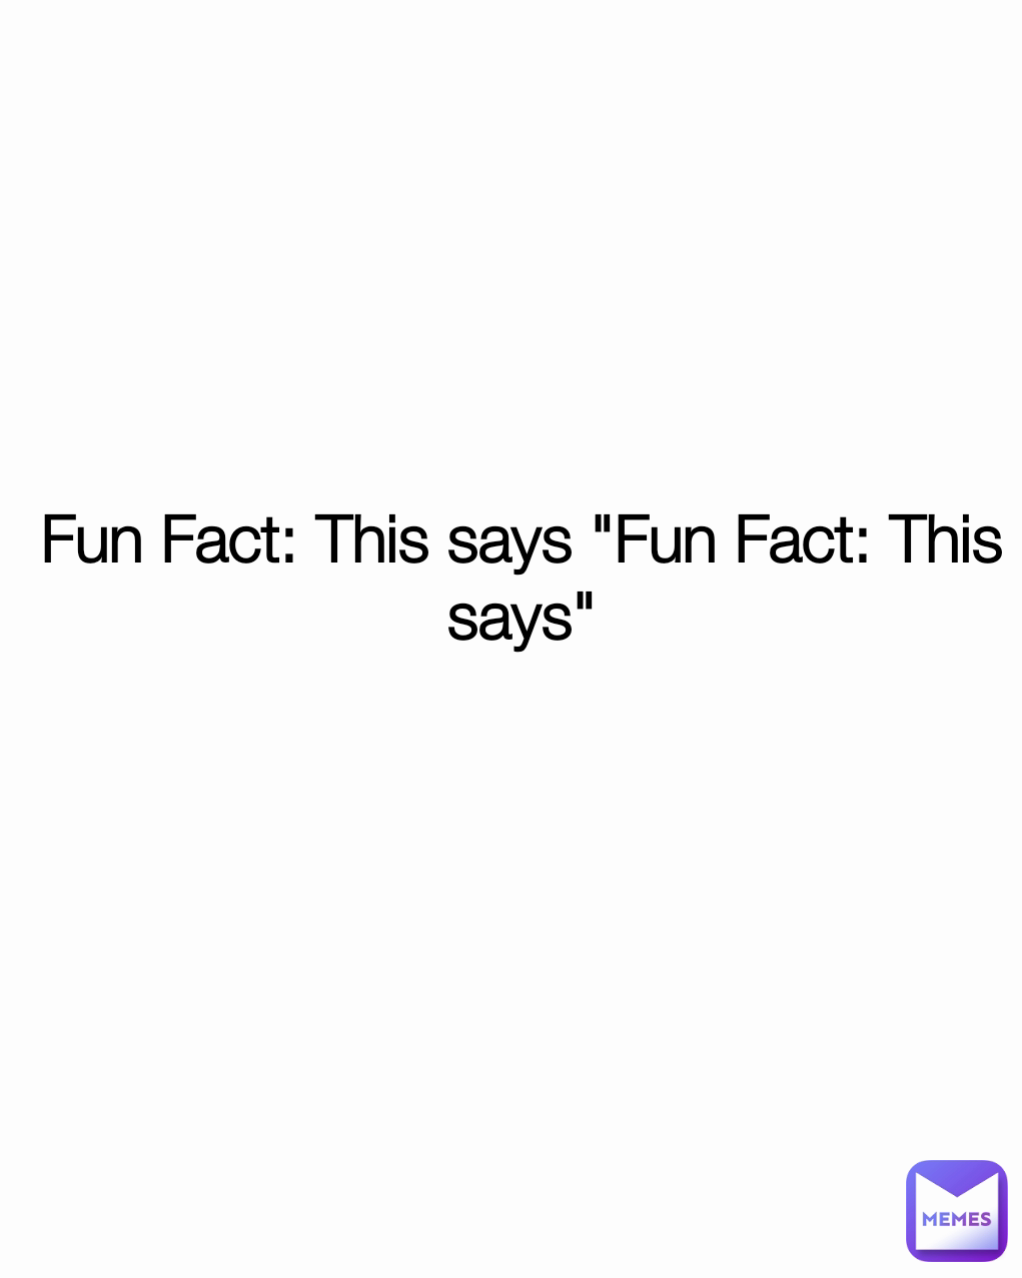 Fun Fact: This says "Fun Fact: This says"